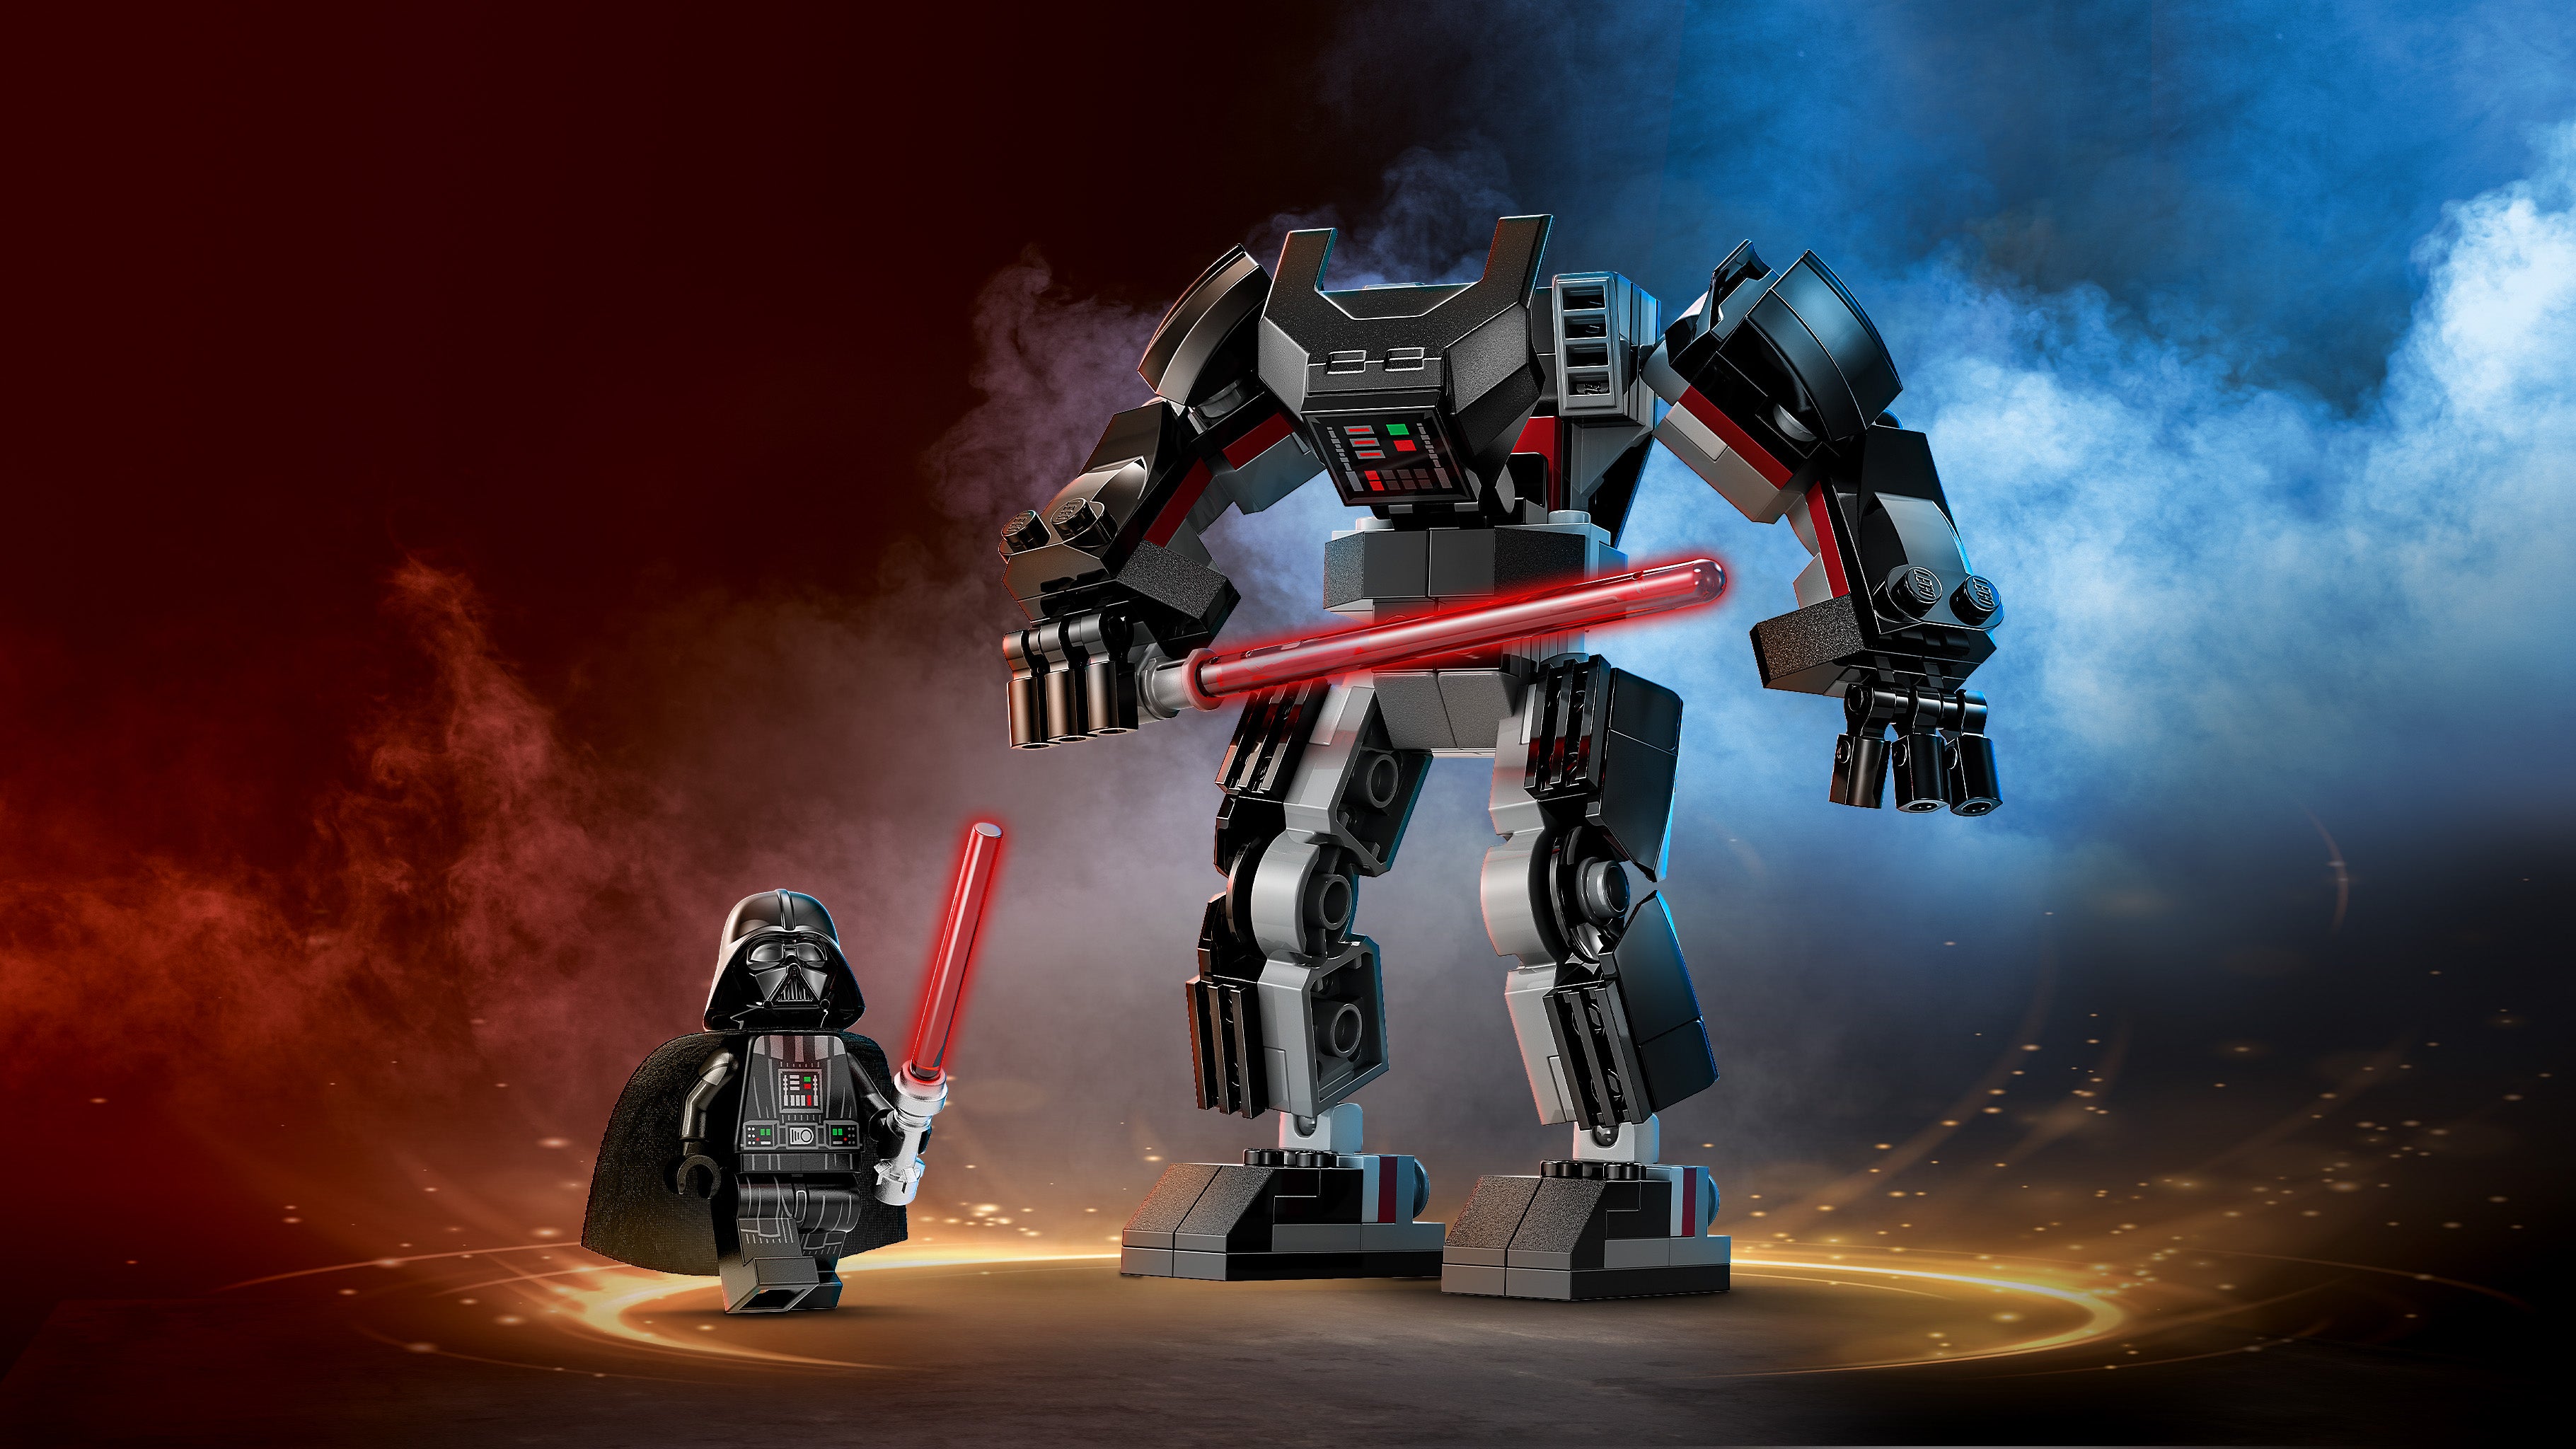 Lego 75368 Darth Vader Mech Playset